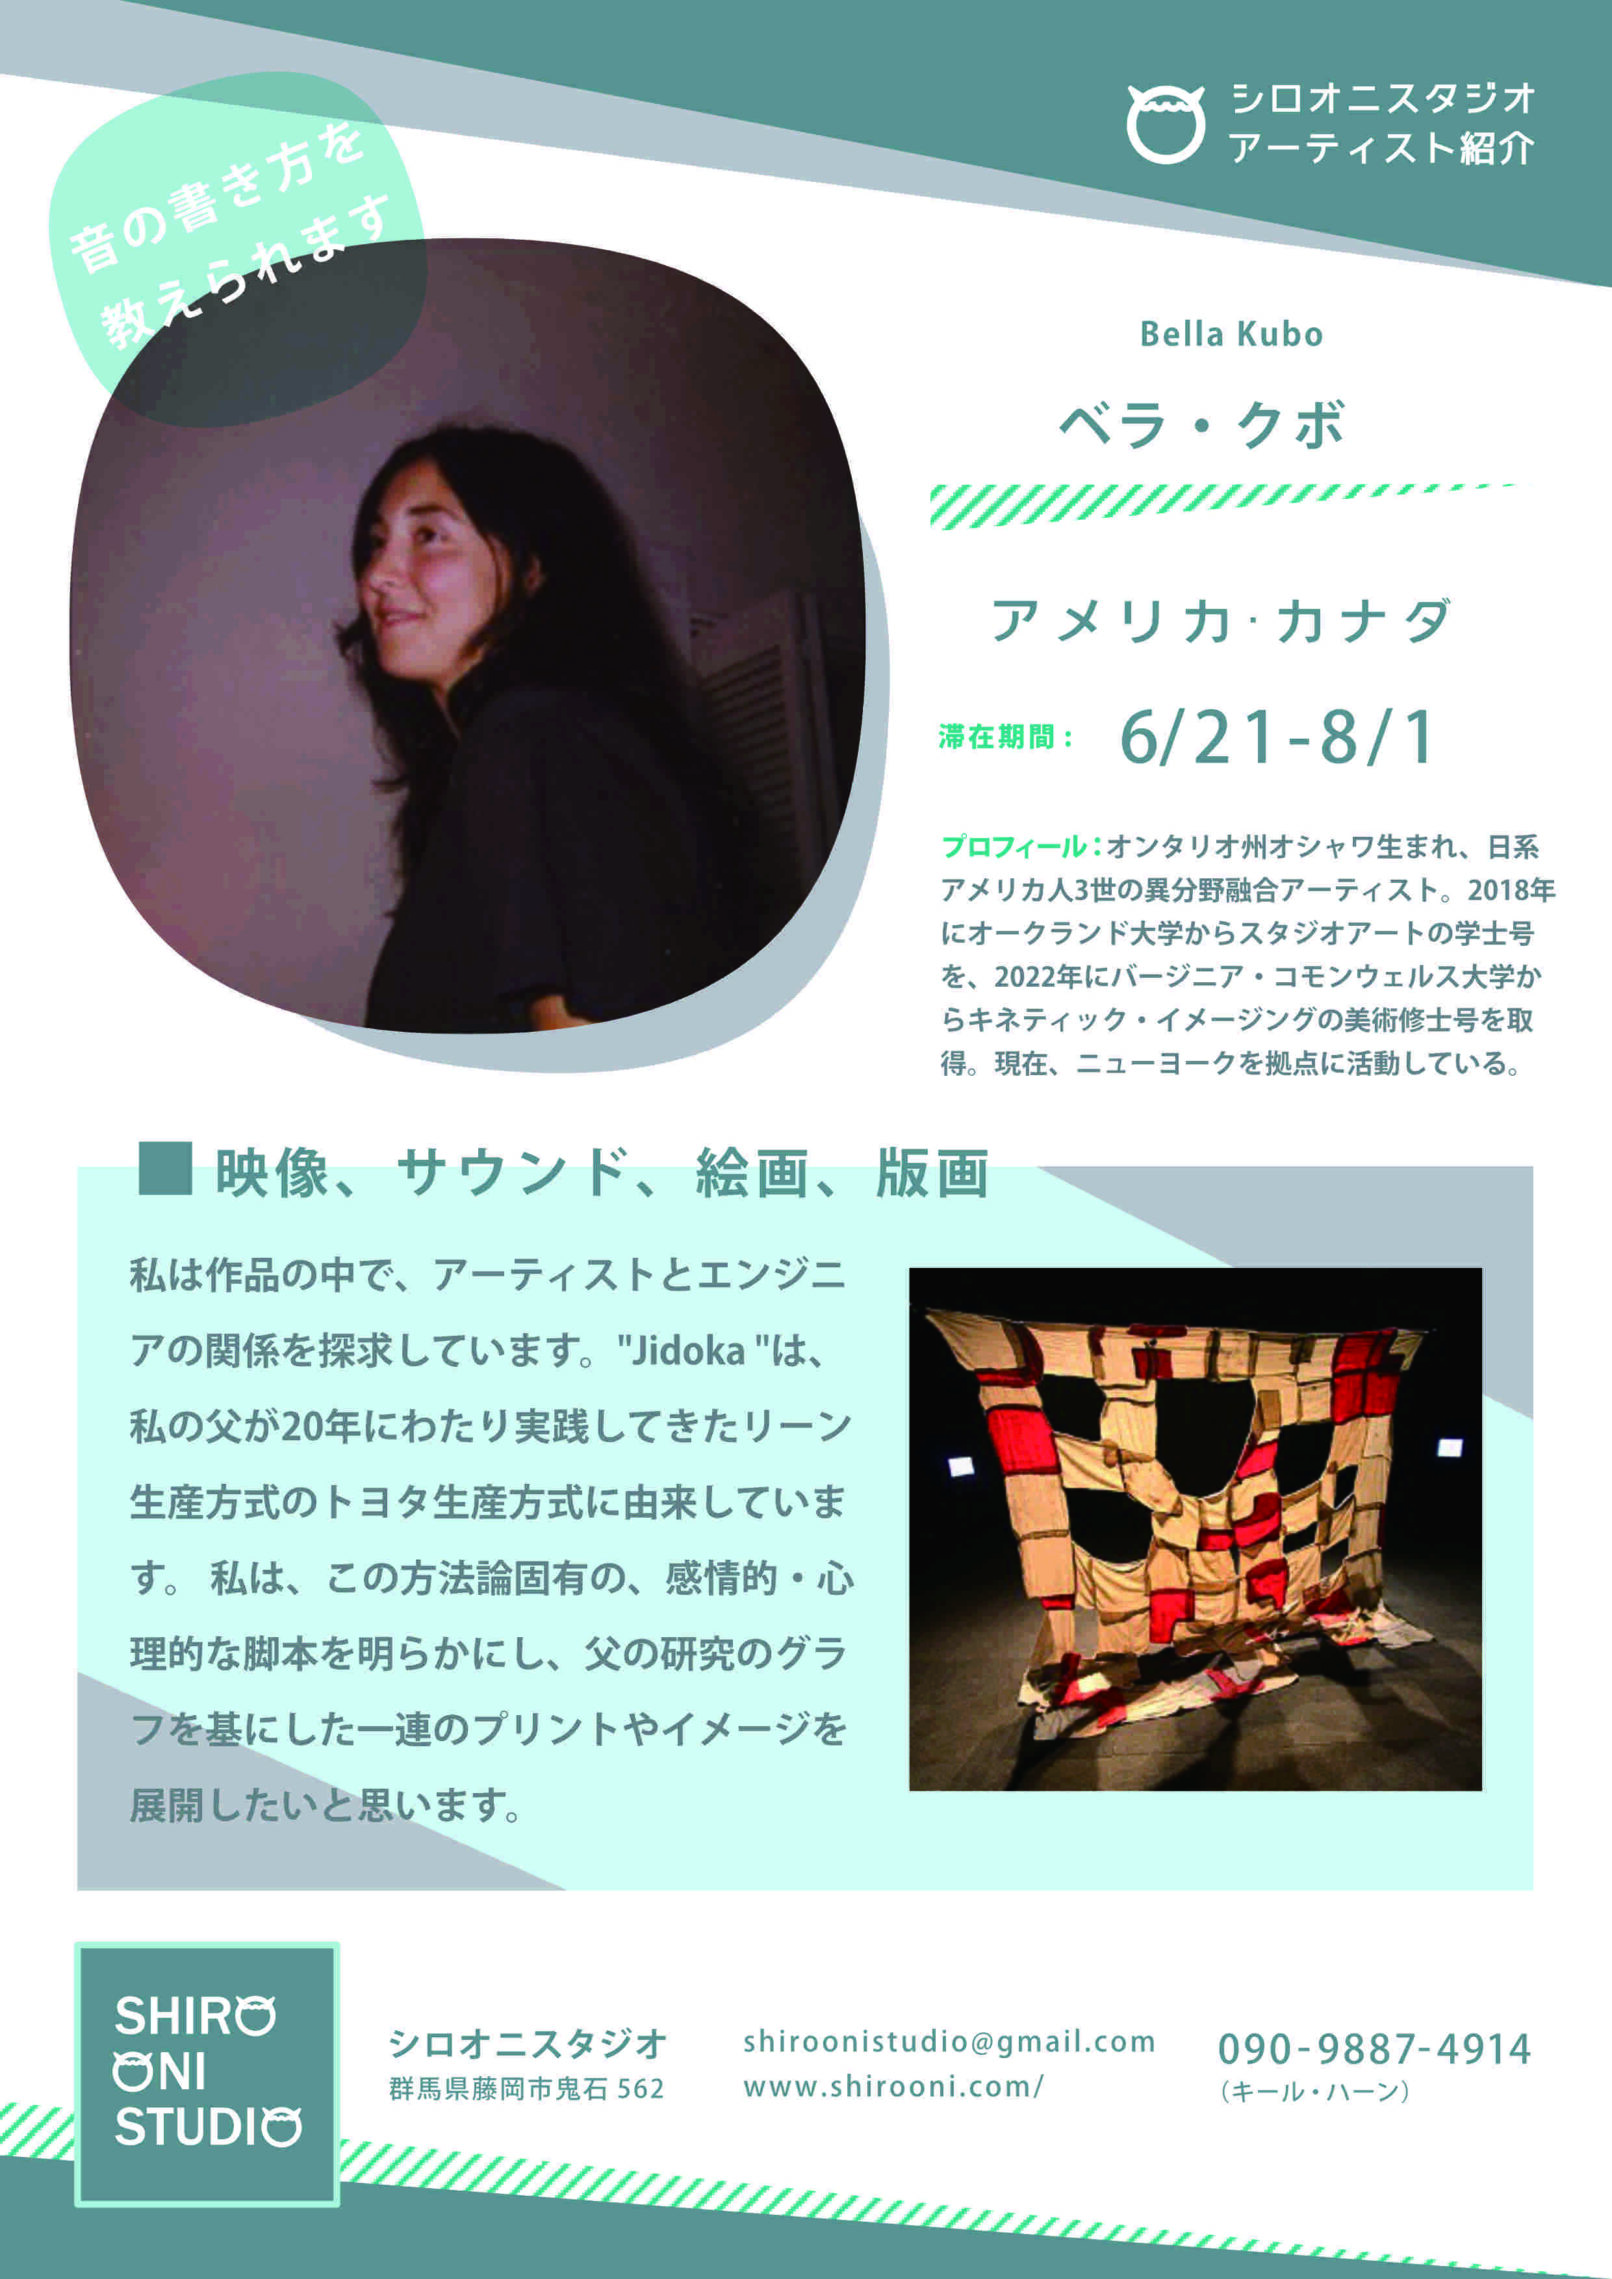 Photographer and Videographer Bella Kubo Artist Profile at Shiro Oni Studio